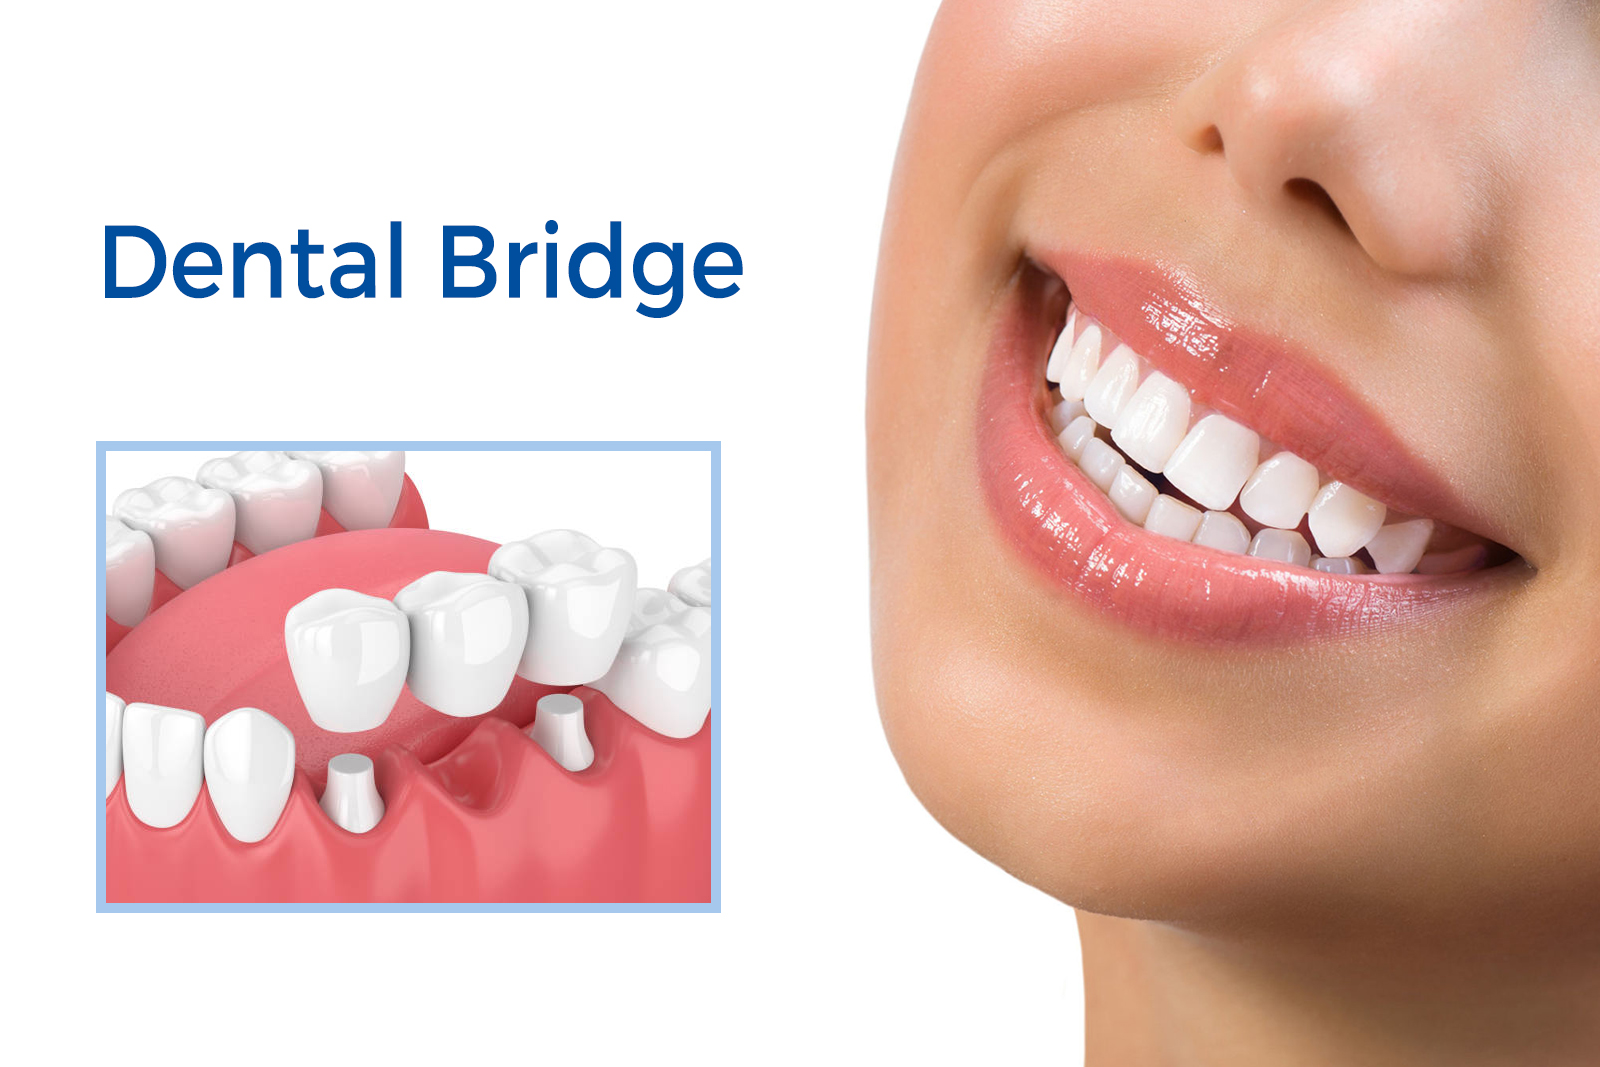 Reasons why dental implant bridges are better than dentures